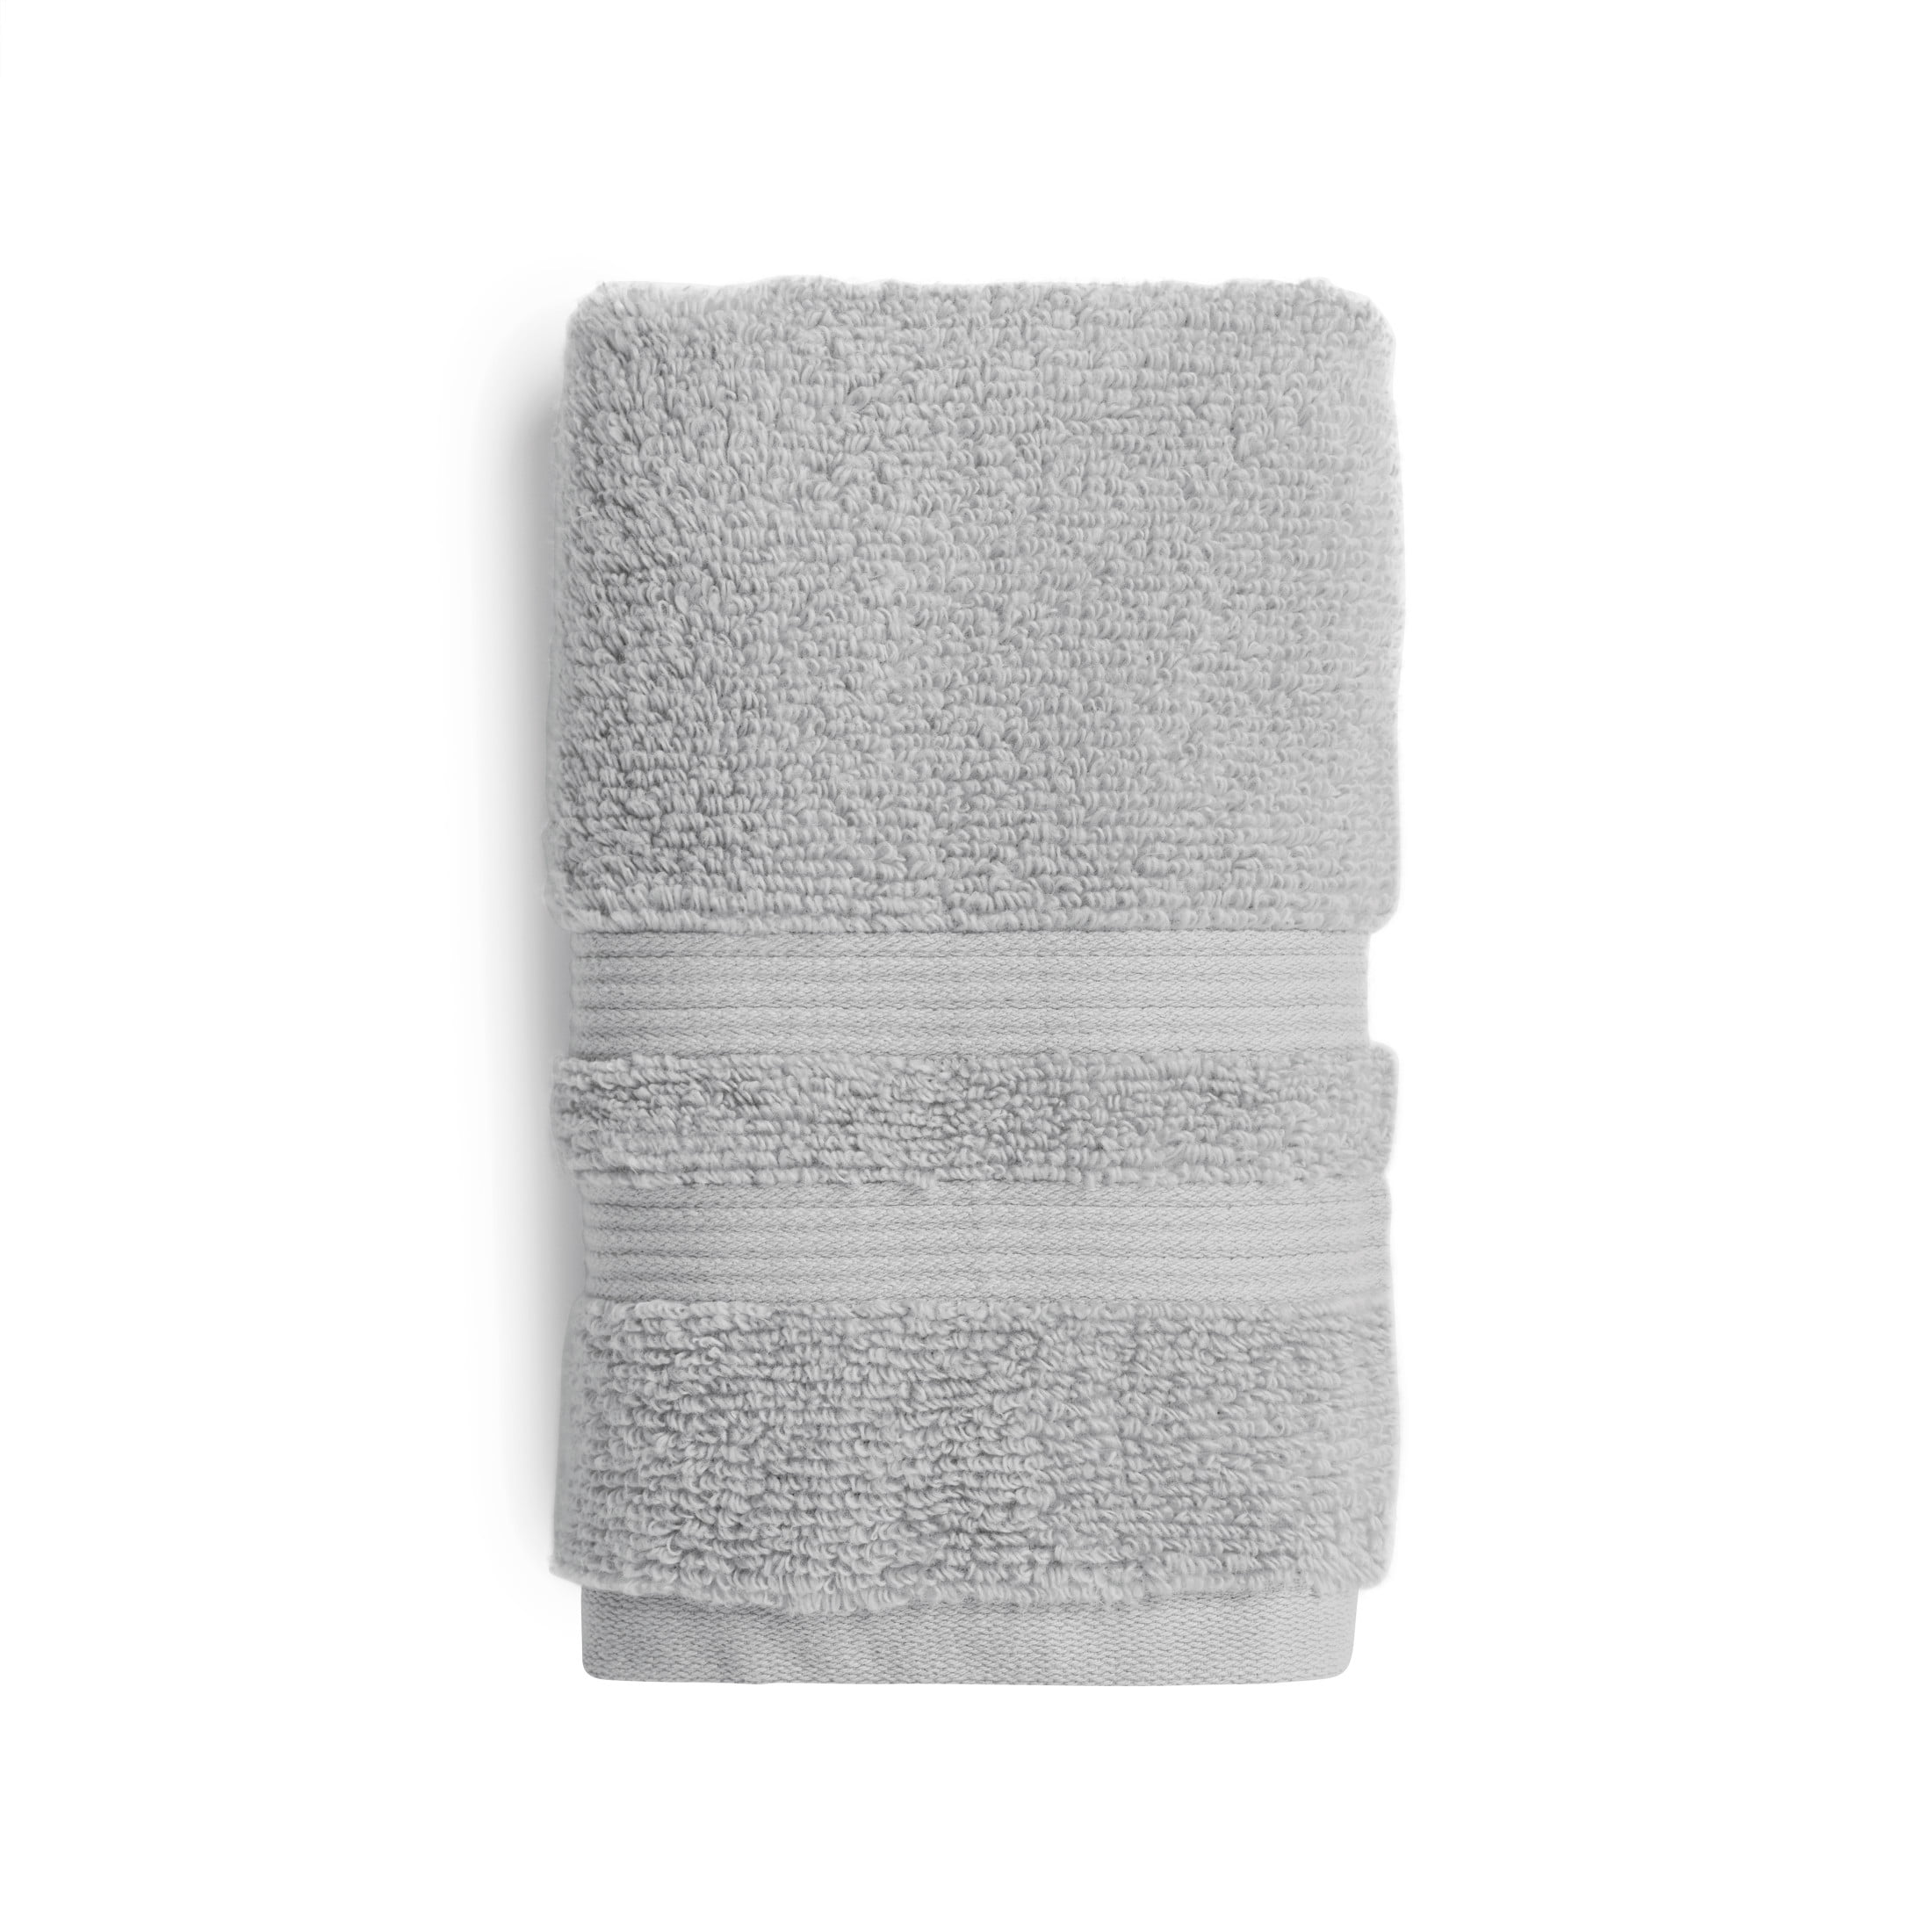 16x26-Dark Brown Bleach Resistant Hand towels 100% Cot – Washcloth Set